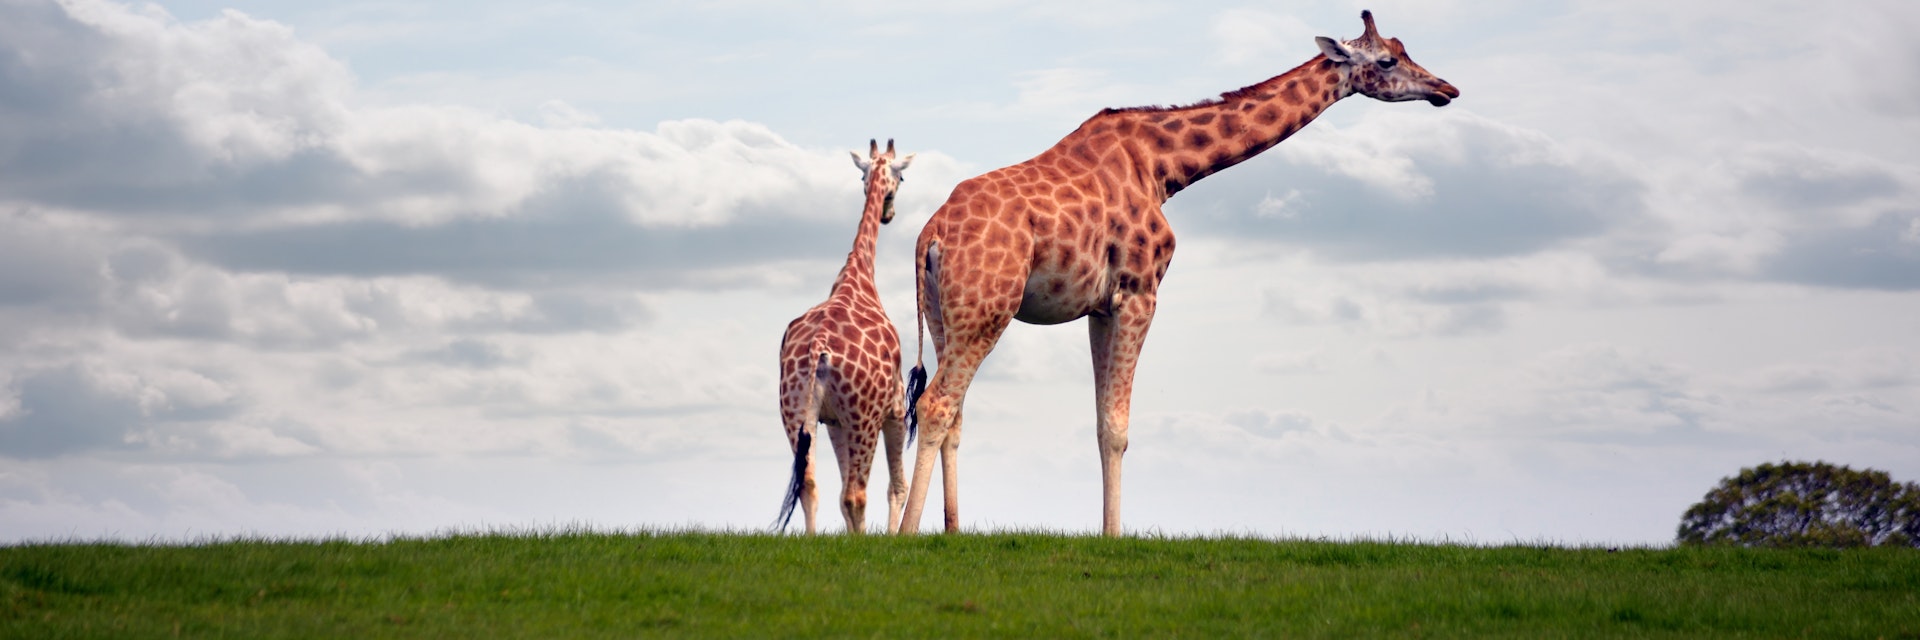 giraffes strolling in the grass on fota wildlife park in county cork ireland